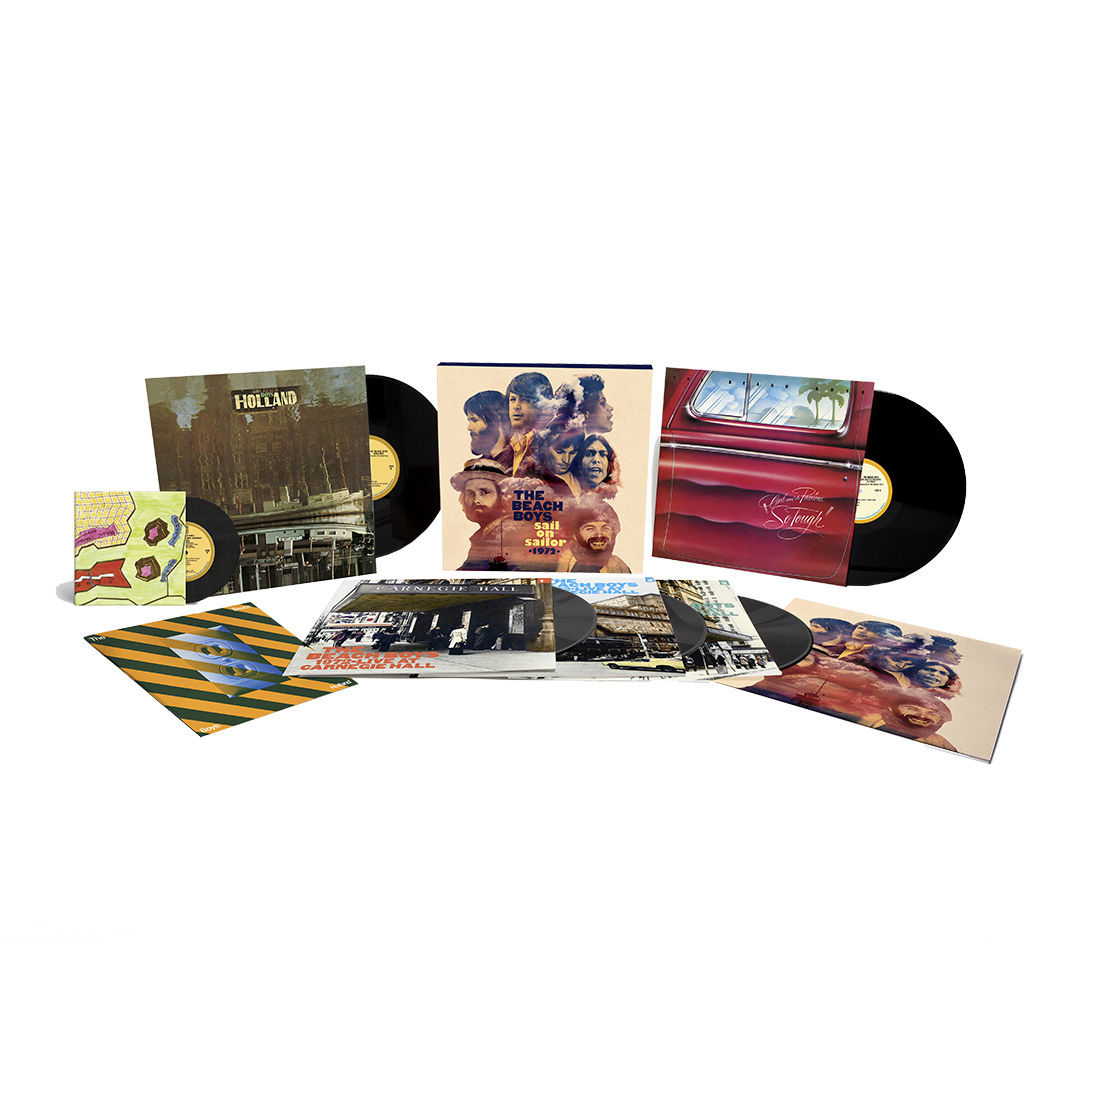 Beach Boys - Sail On Sailor 1972: Limited Vinyl 5LP + 7" EP Box Set